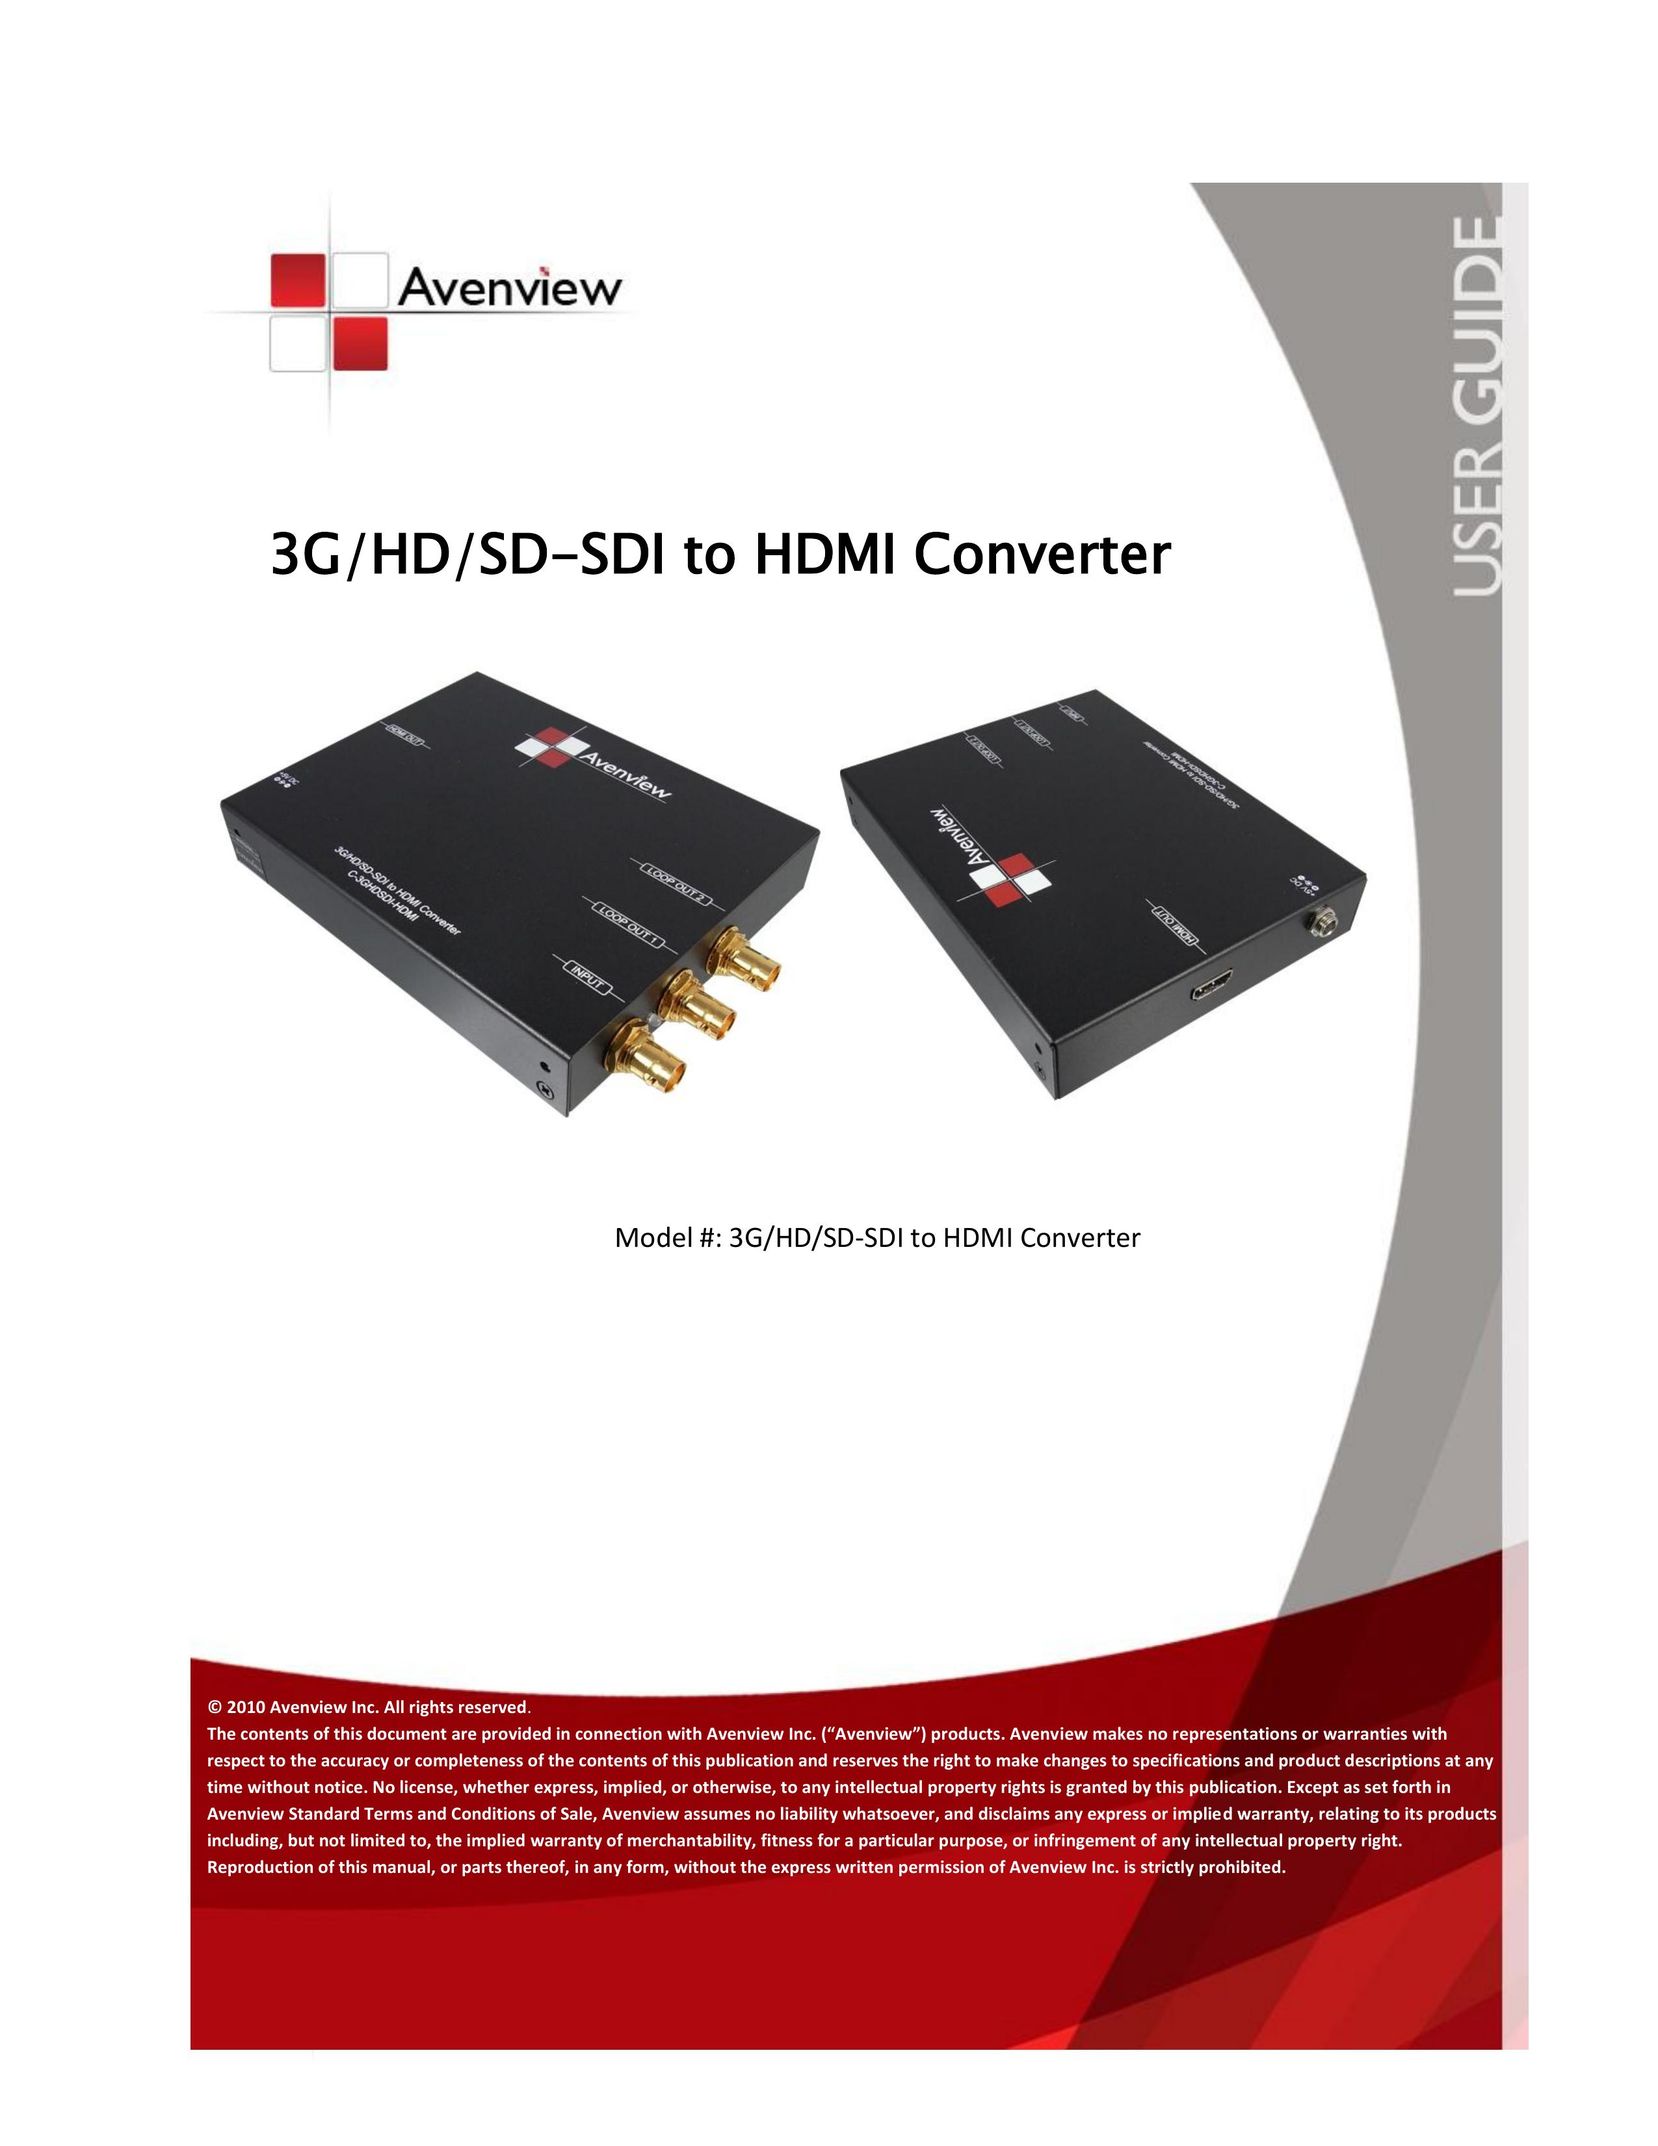 Avenview 3G/HD/SD-SDI to HDMI Cable Box User Manual